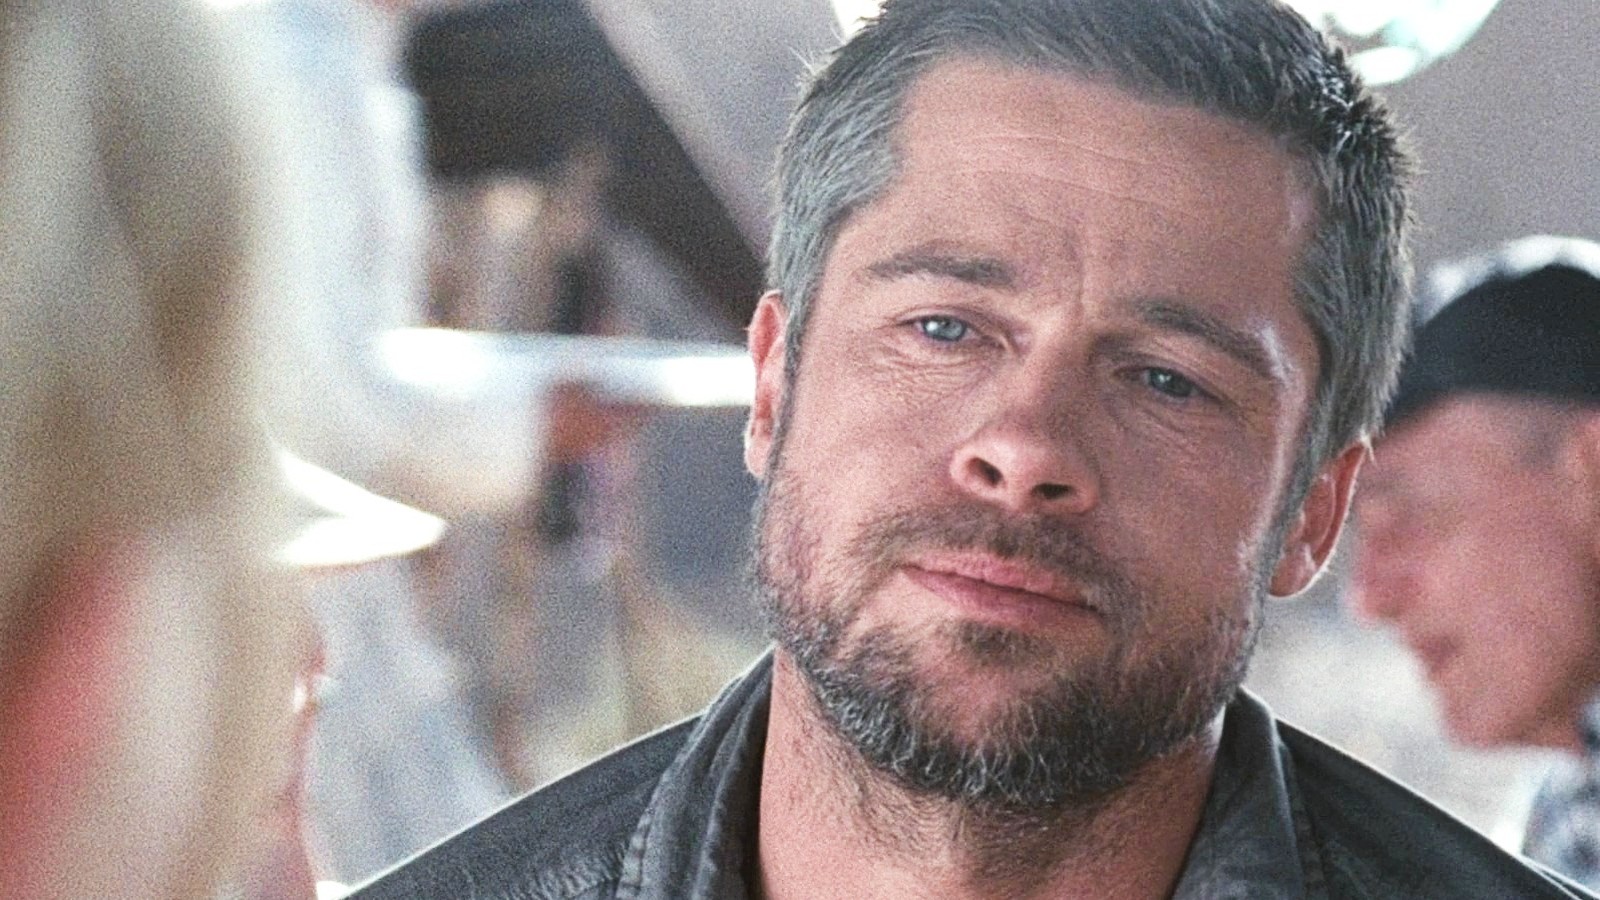 Brad Pitt Is An Abuser' Trends On Social Media After His Golden